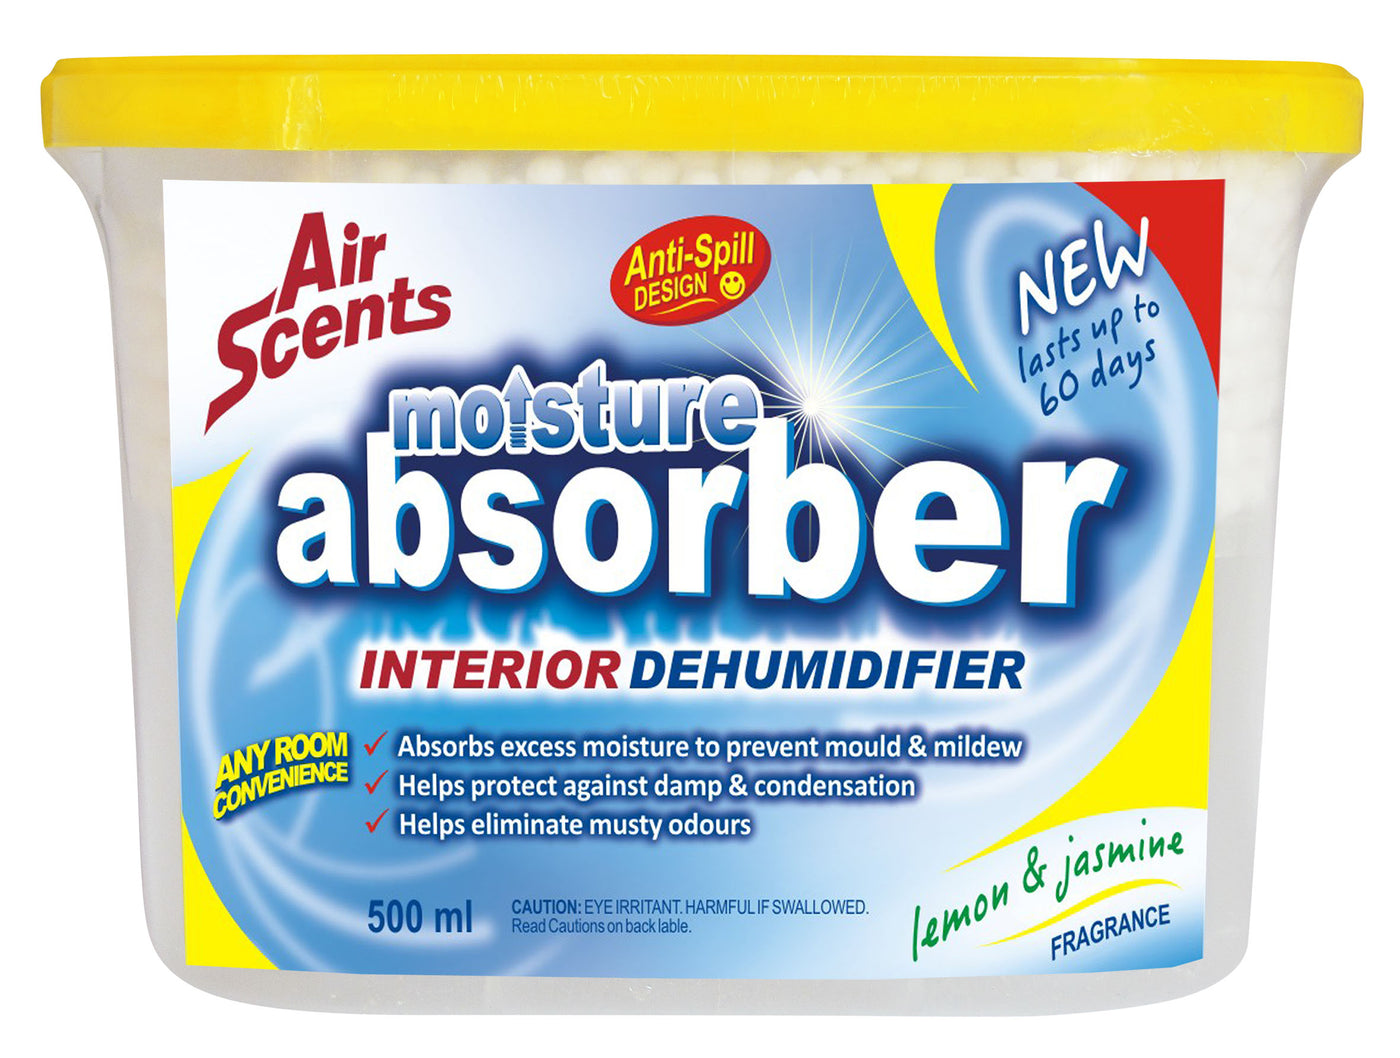 Air Scents Moisture absorber Lemon & Jasmine 500ml